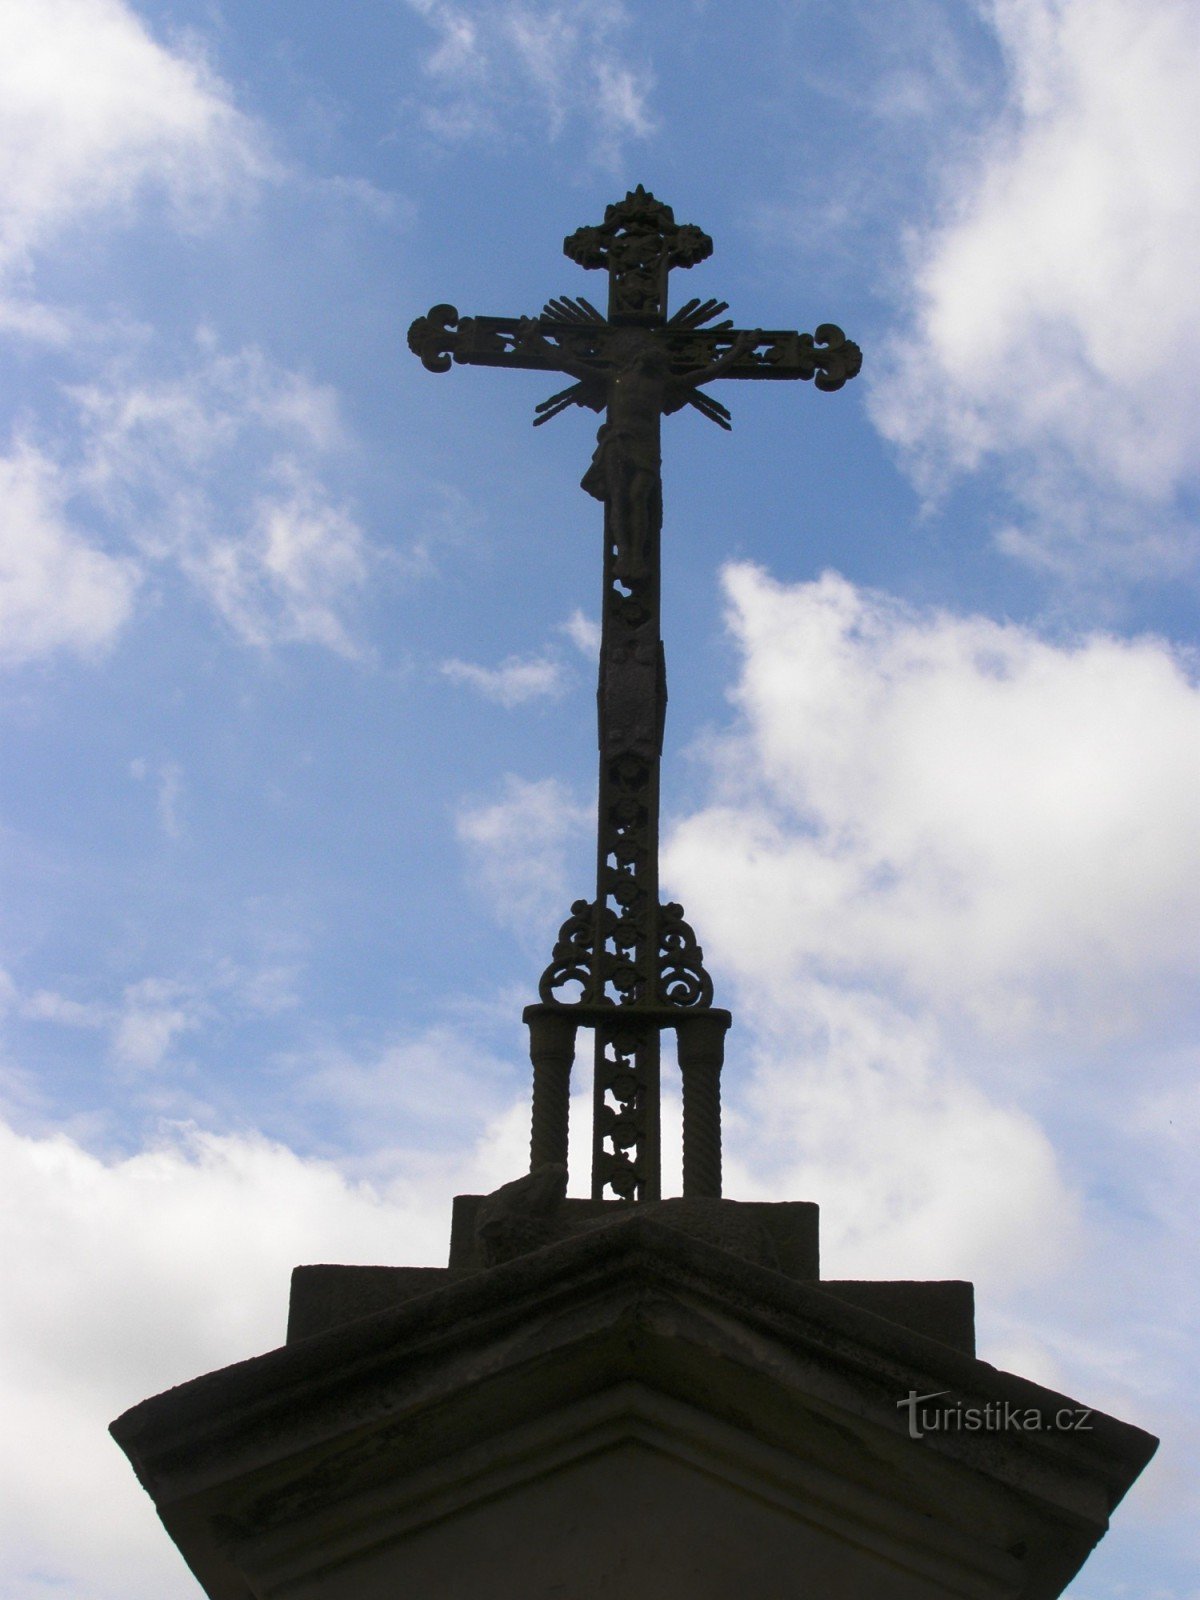 Krzyż koło Vlhoště